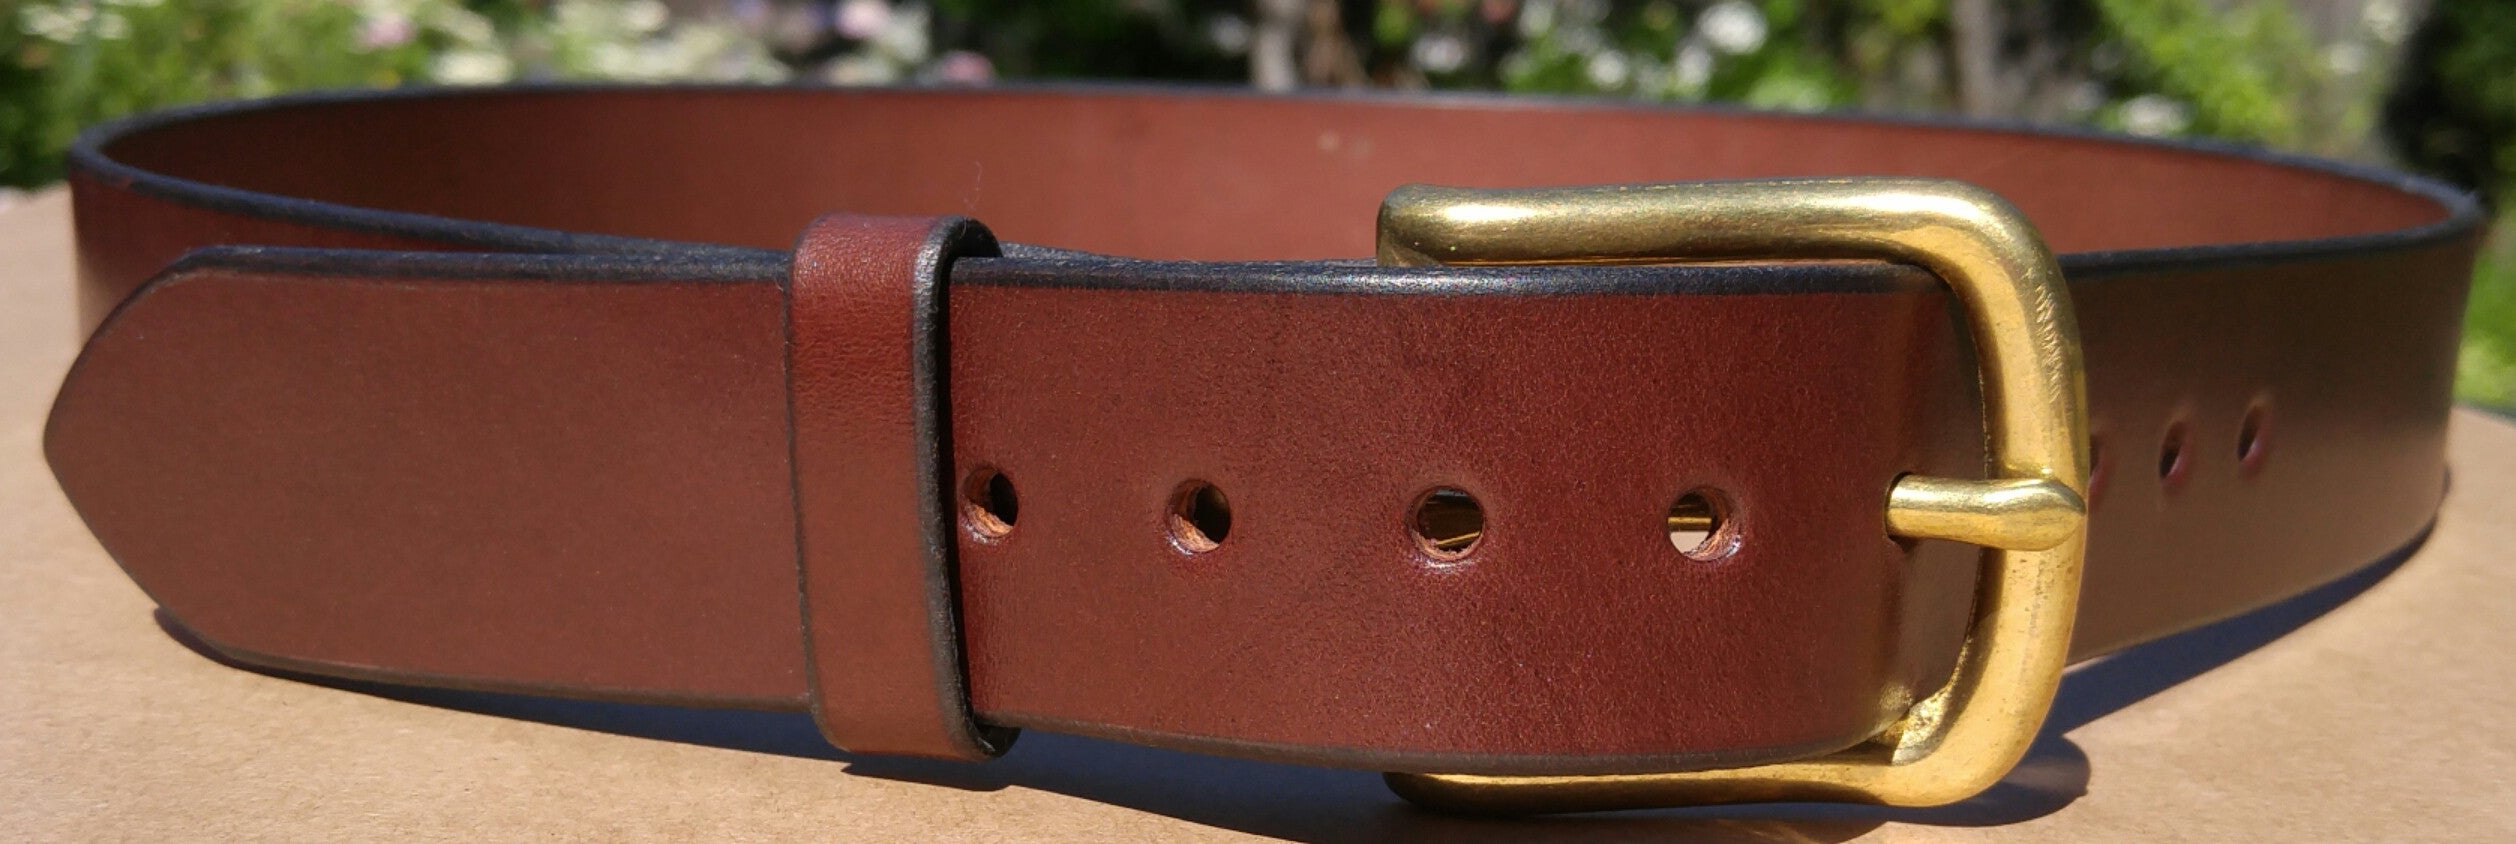 1¼-inch-Wide Handmade Leather Dress Belt - Handmade'n Leather